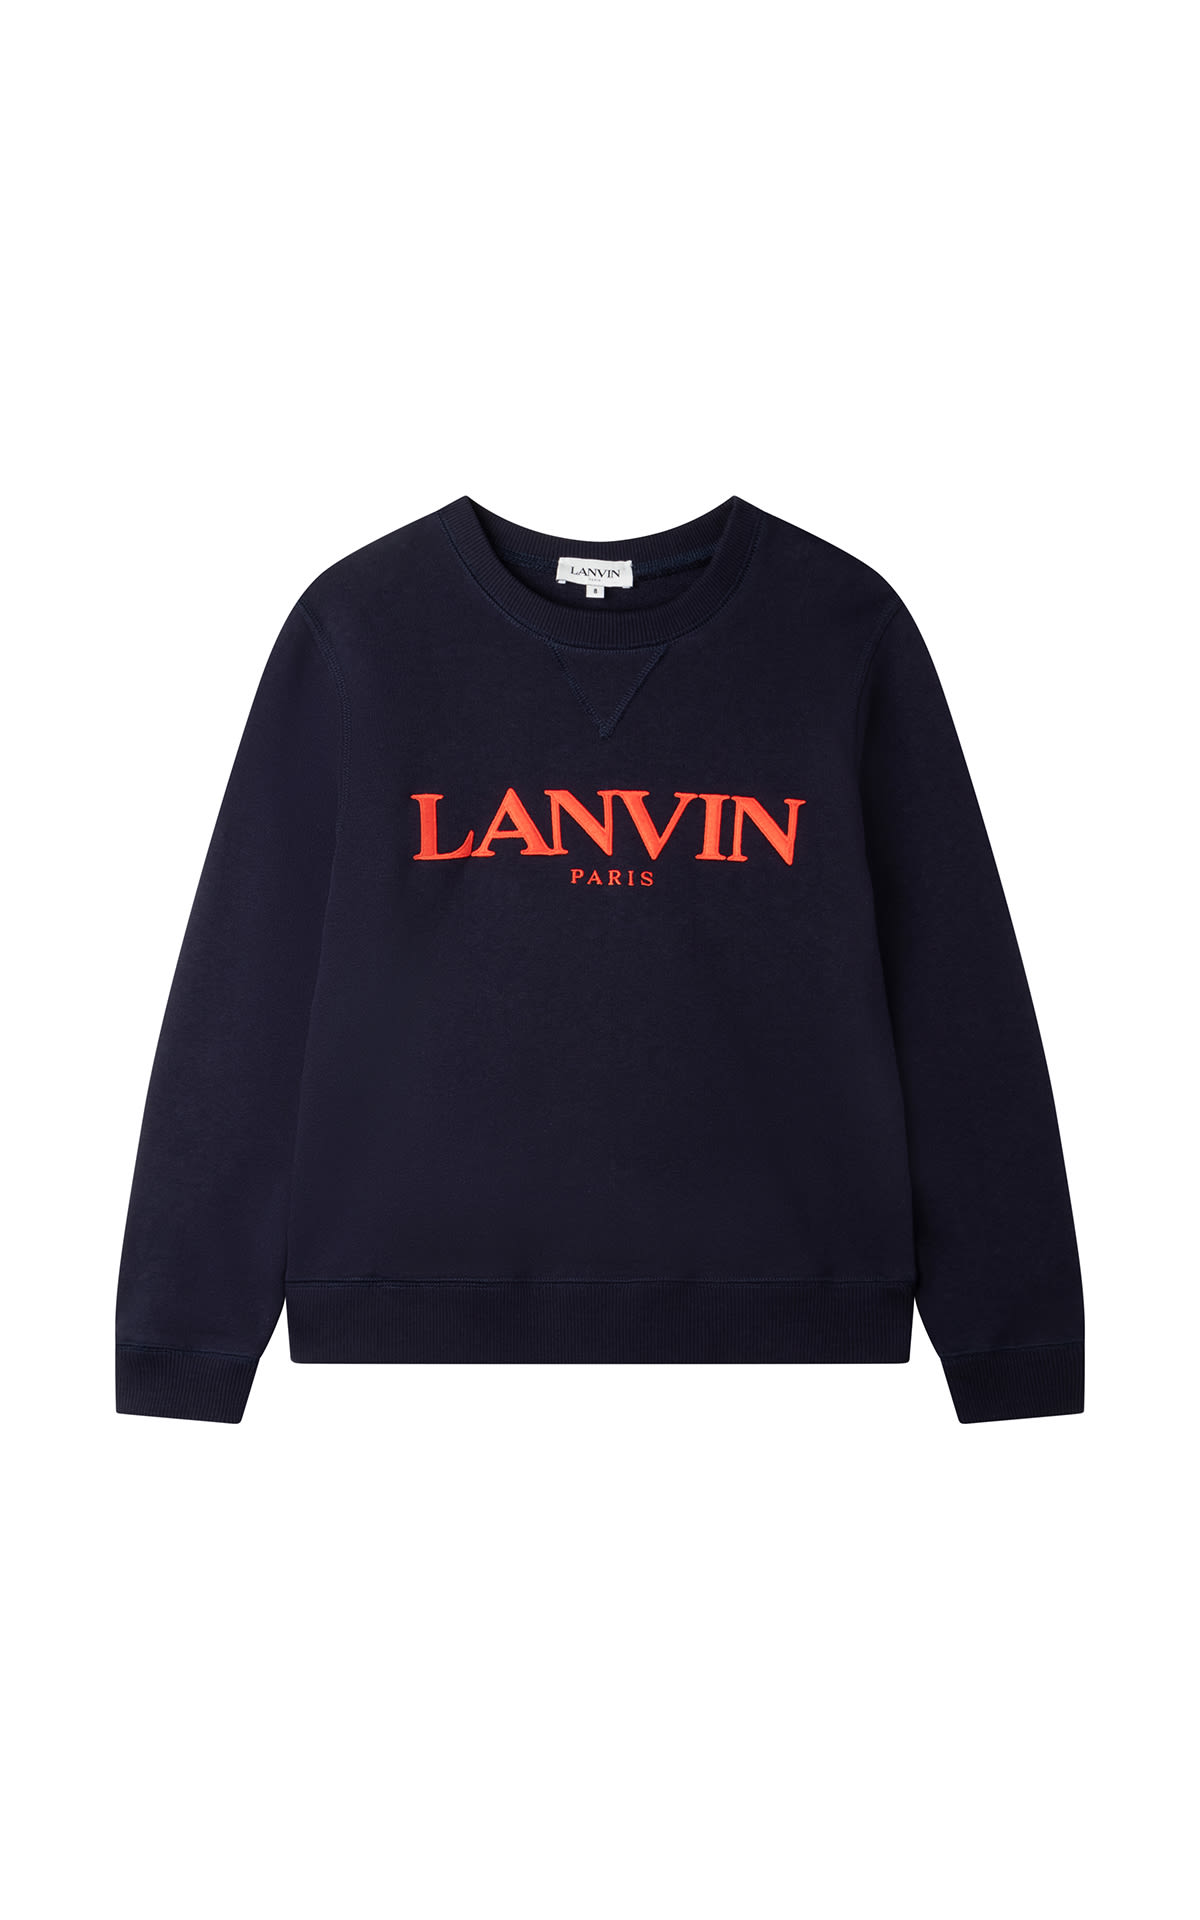 Lanvin - Navy Sweater